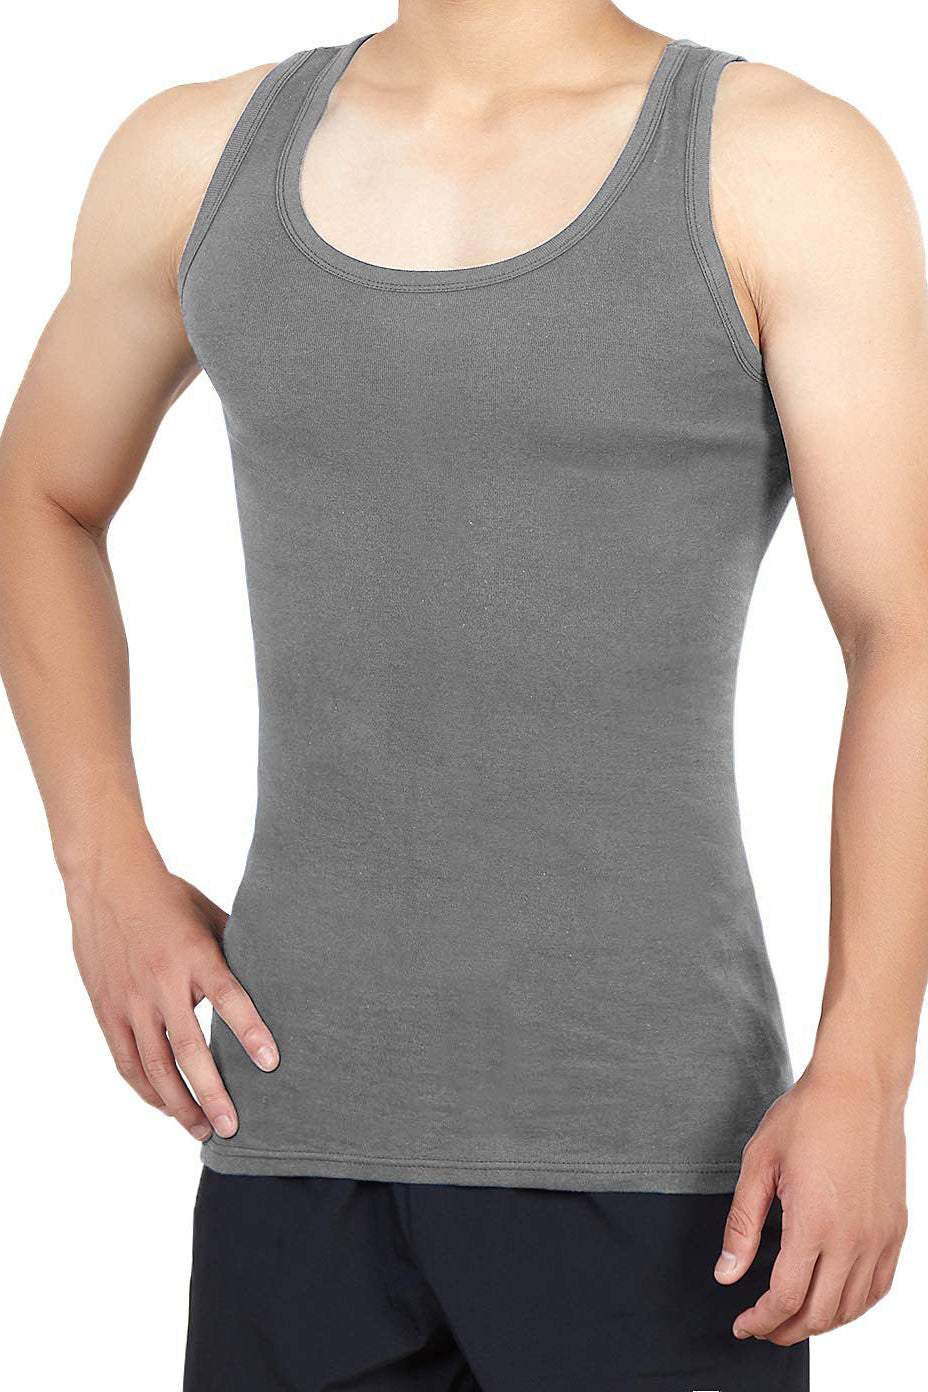 Men's Undershirts Vest 4 pieces SETS, Soft and Breathable underwear (g –  